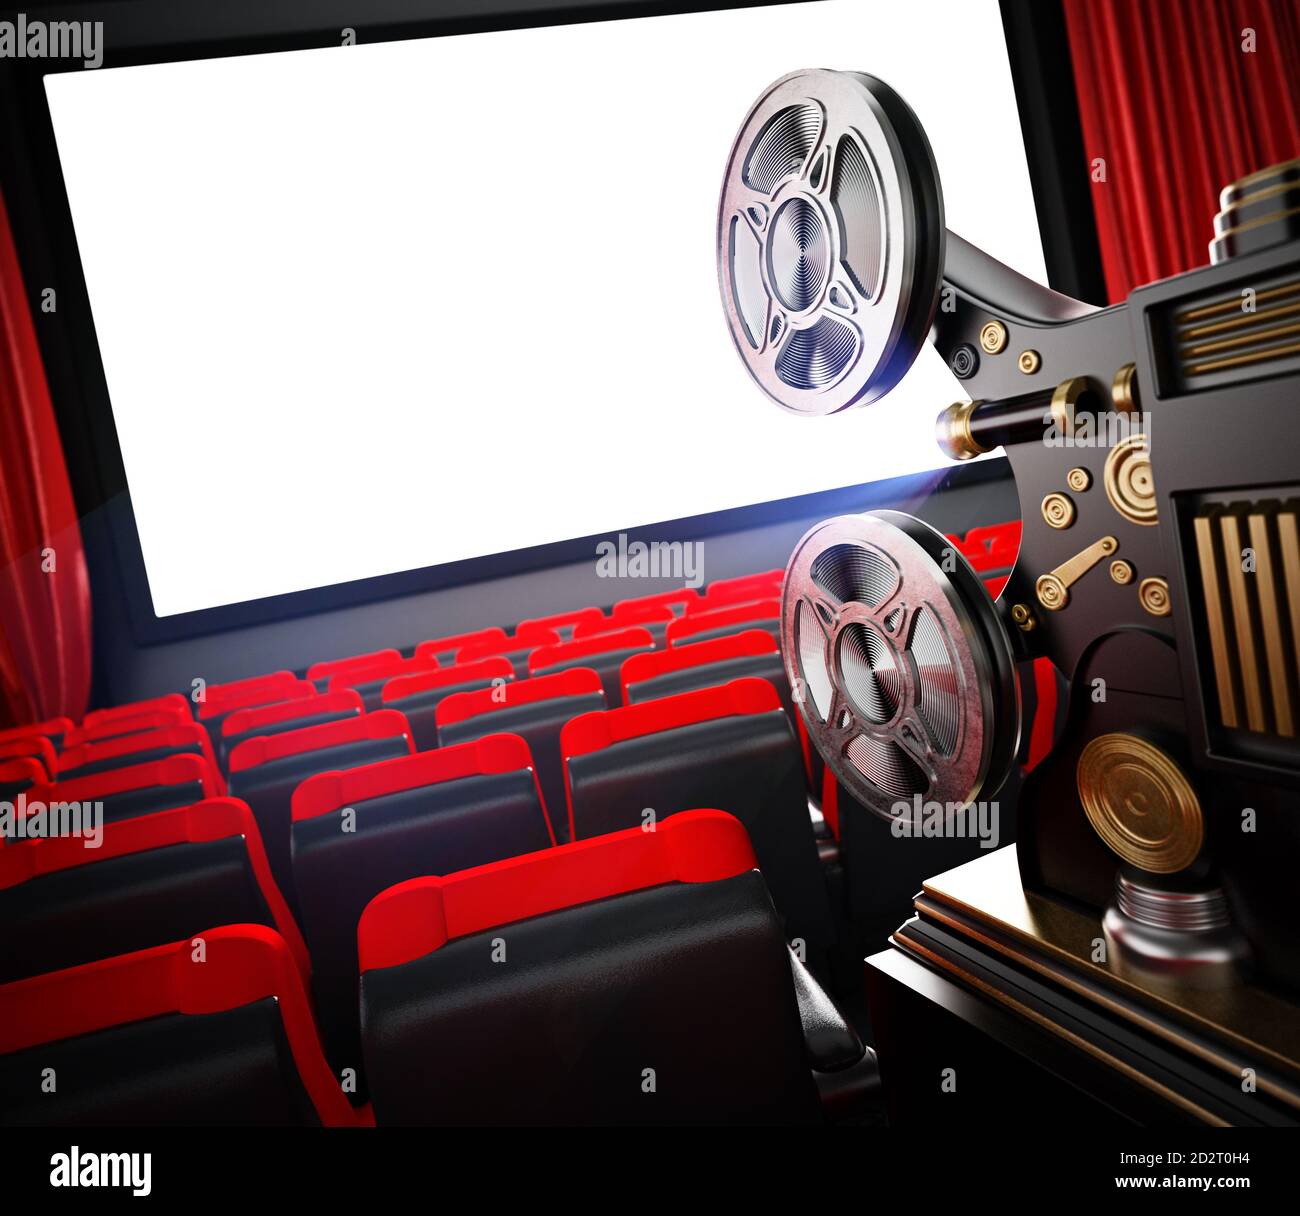 Vintage cinema projector in cinema theater. 3D illustration Stock Photo -  Alamy